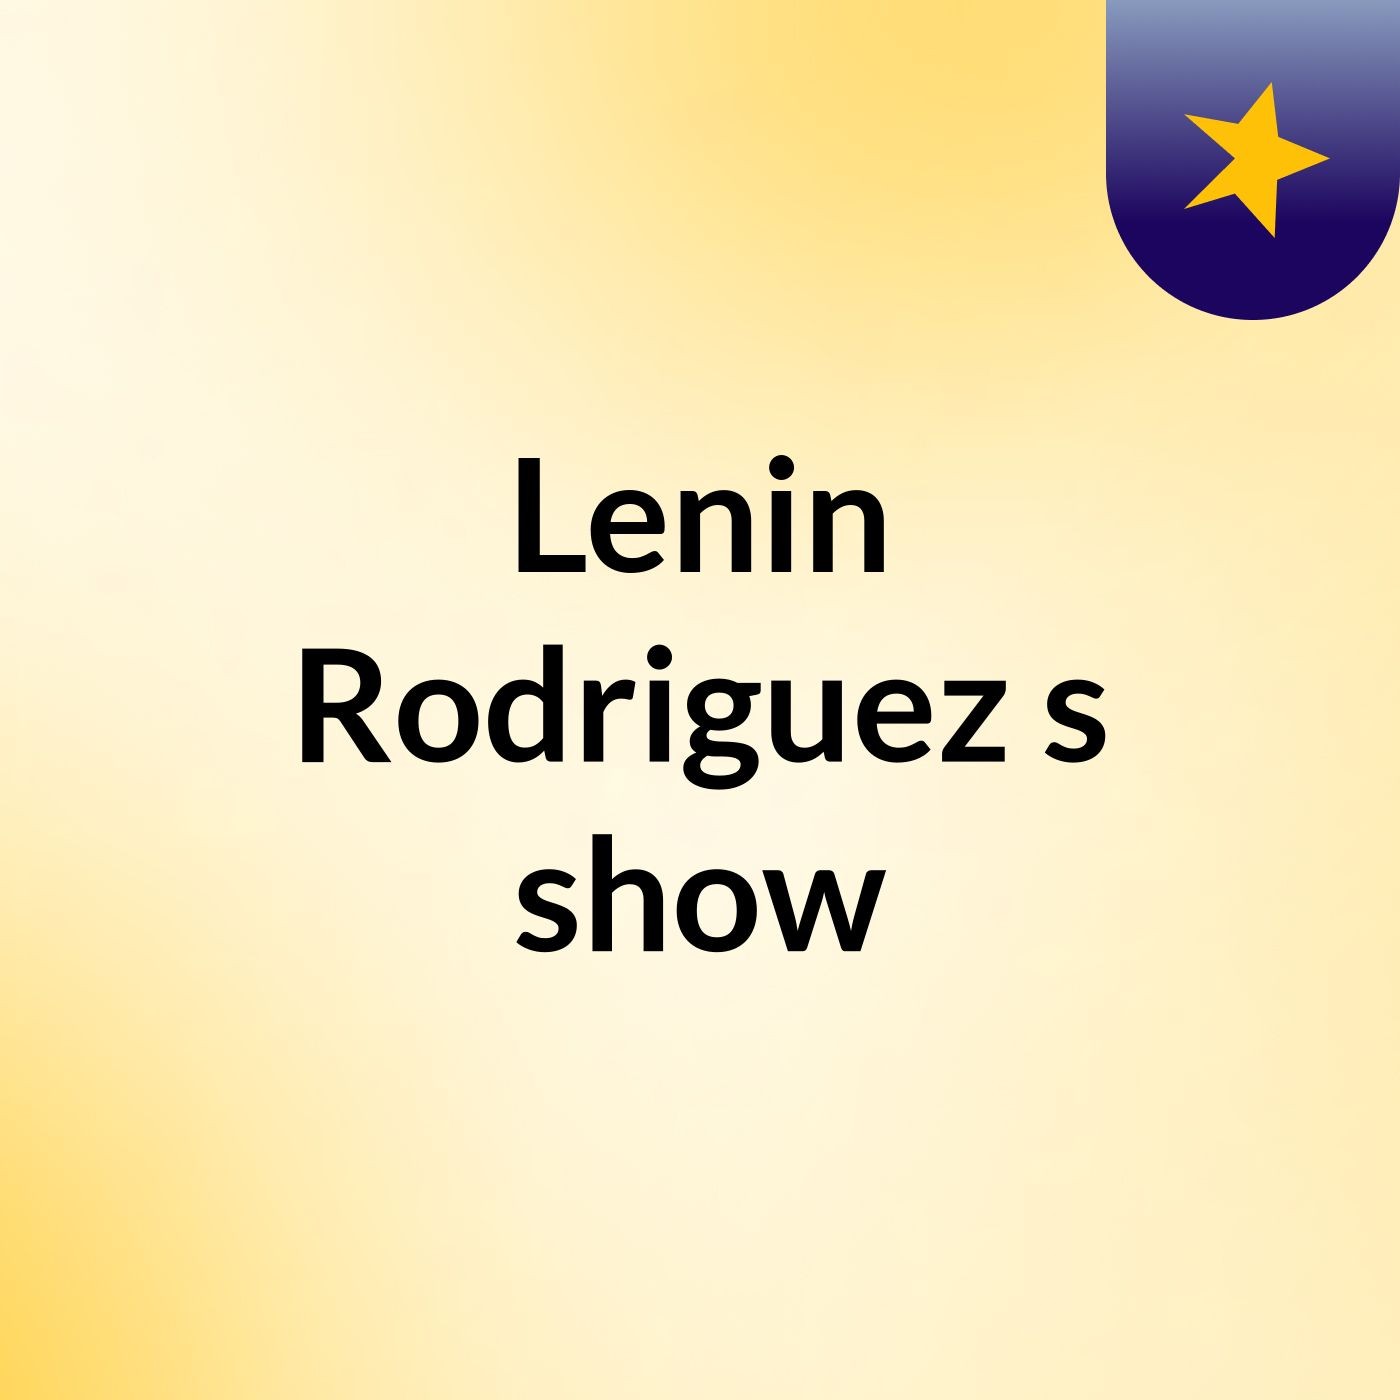 Episode 2 - Lenin Rodriguez's show